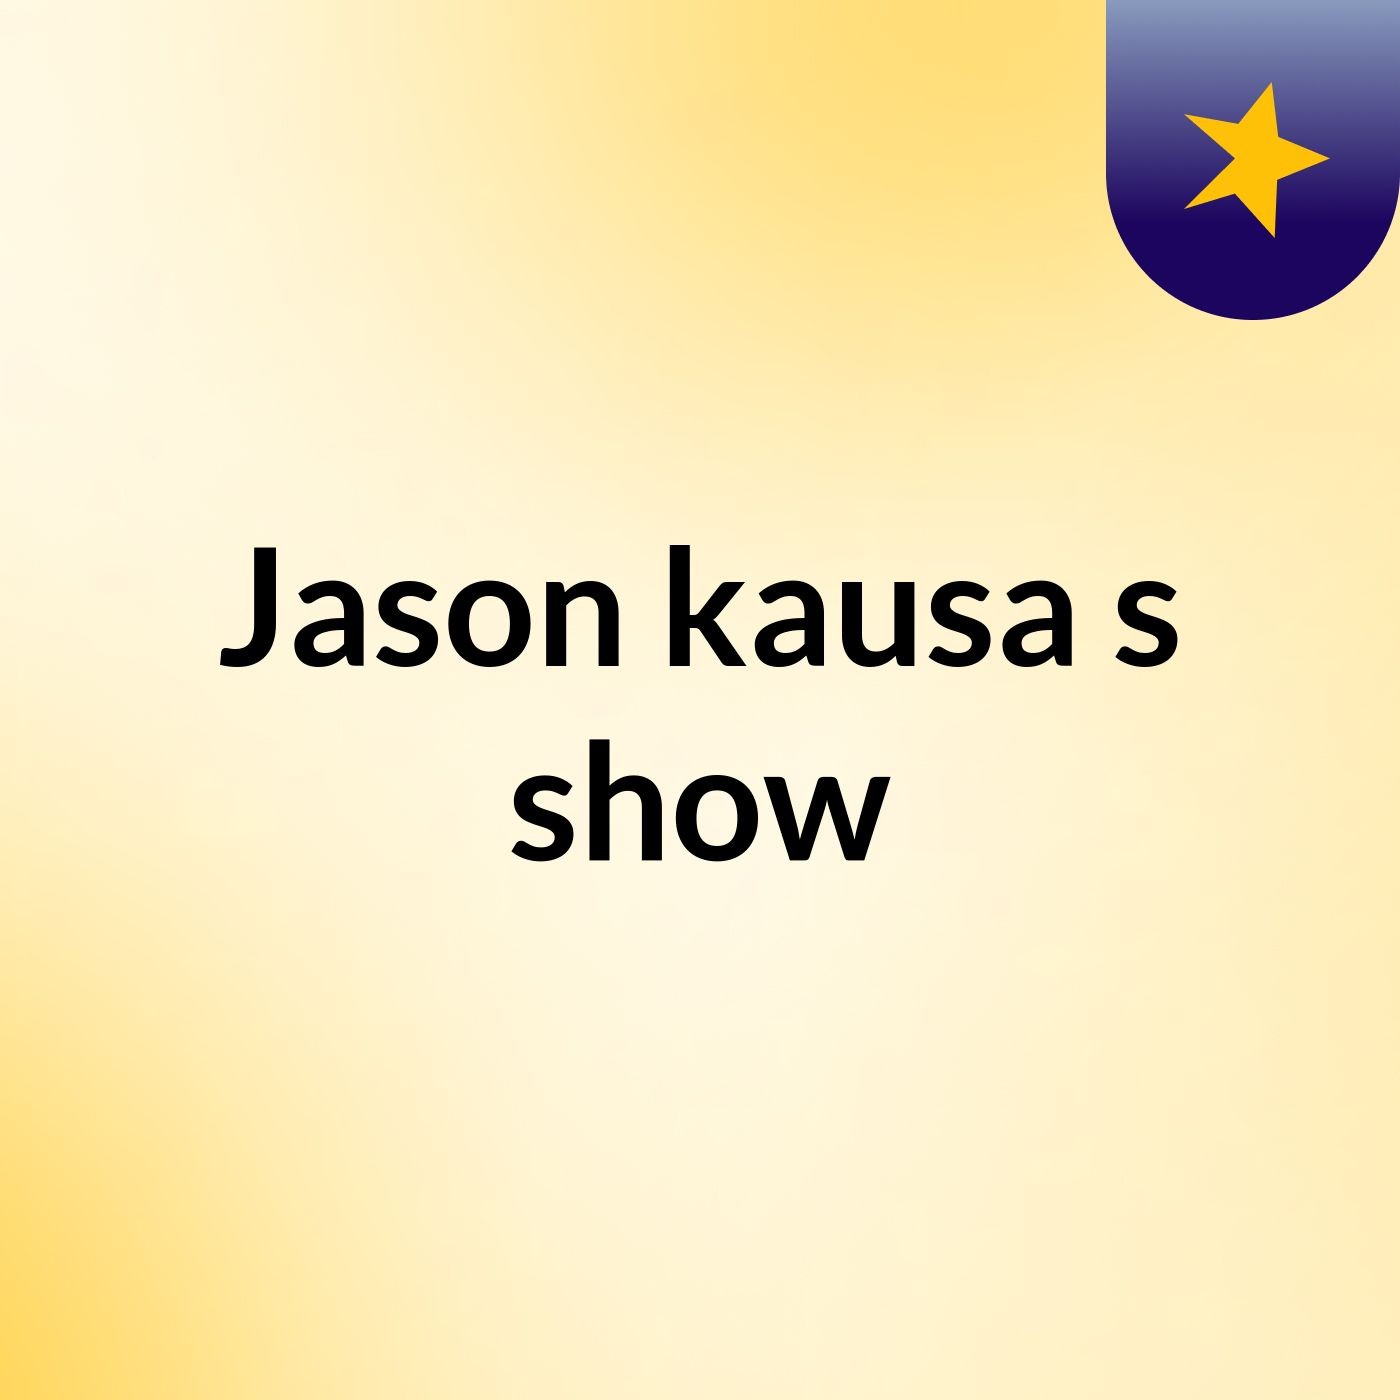 Jason kausa's show